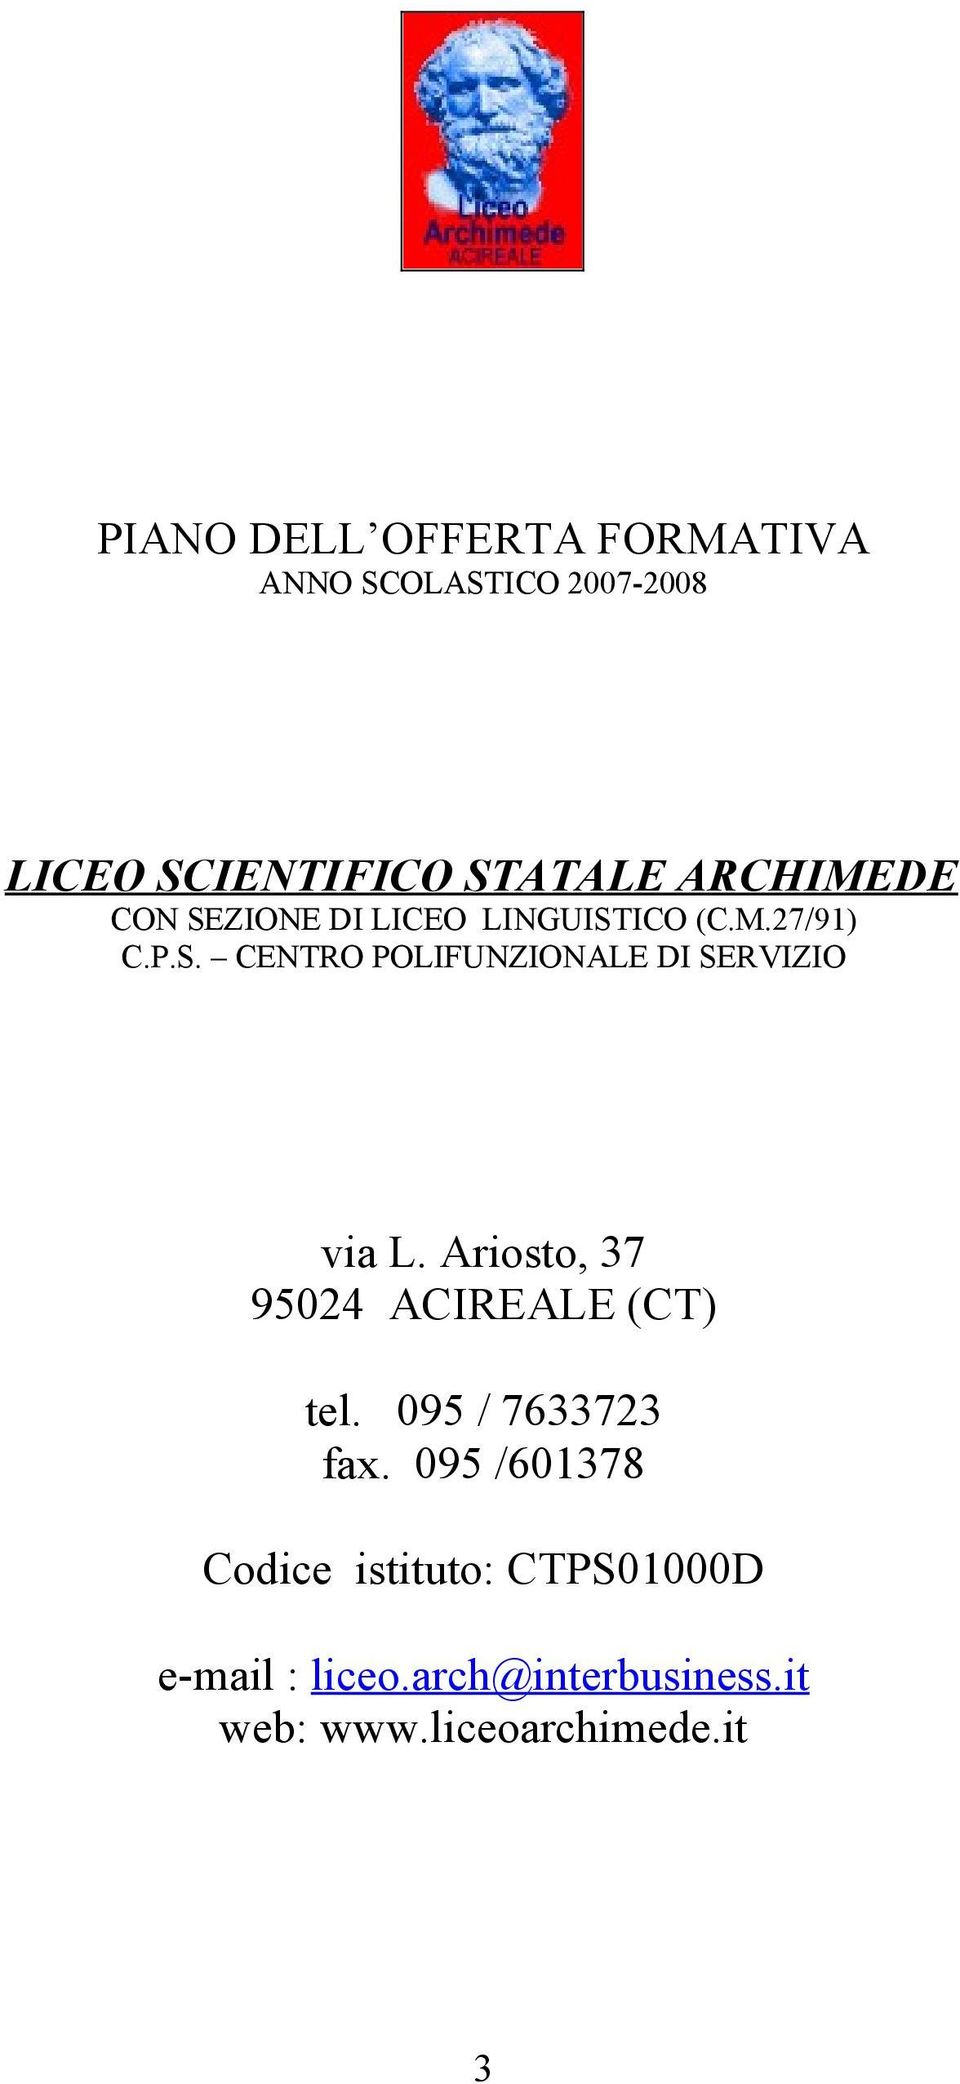 Ariosto, 7 950 ACIREALE (CT) tel. 095 / 767 fax.